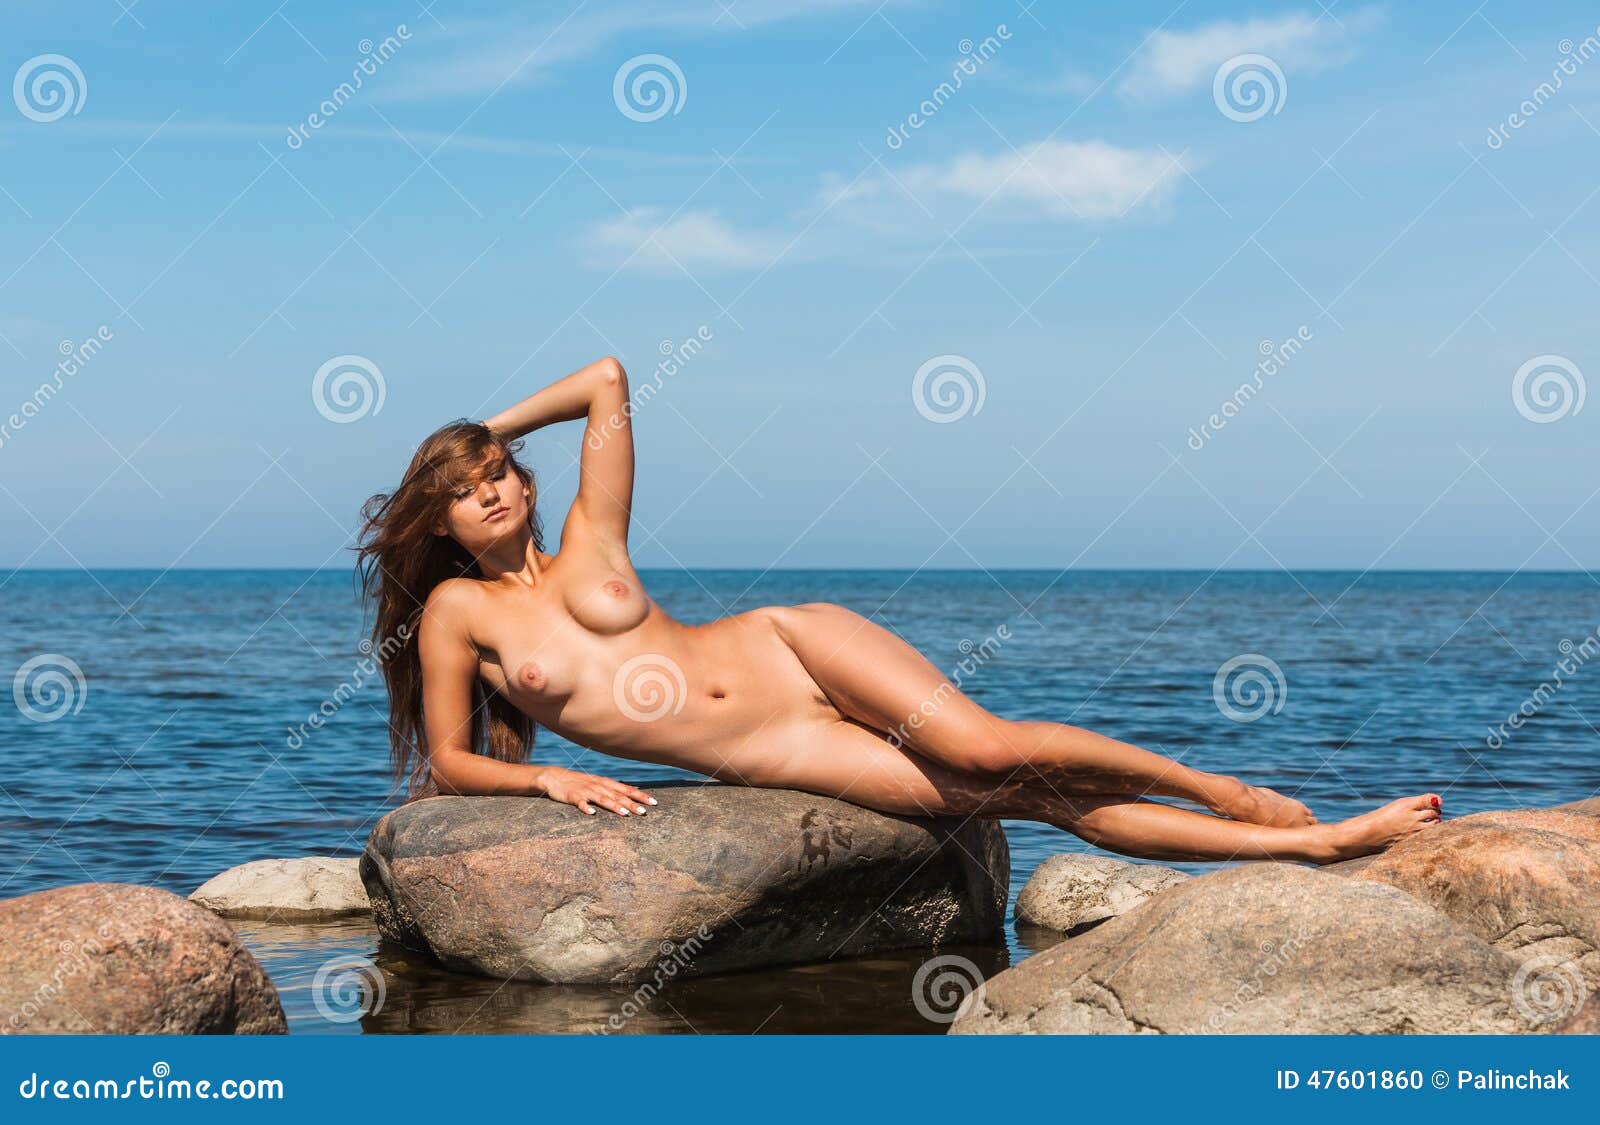 Free Nude Photos Of Women